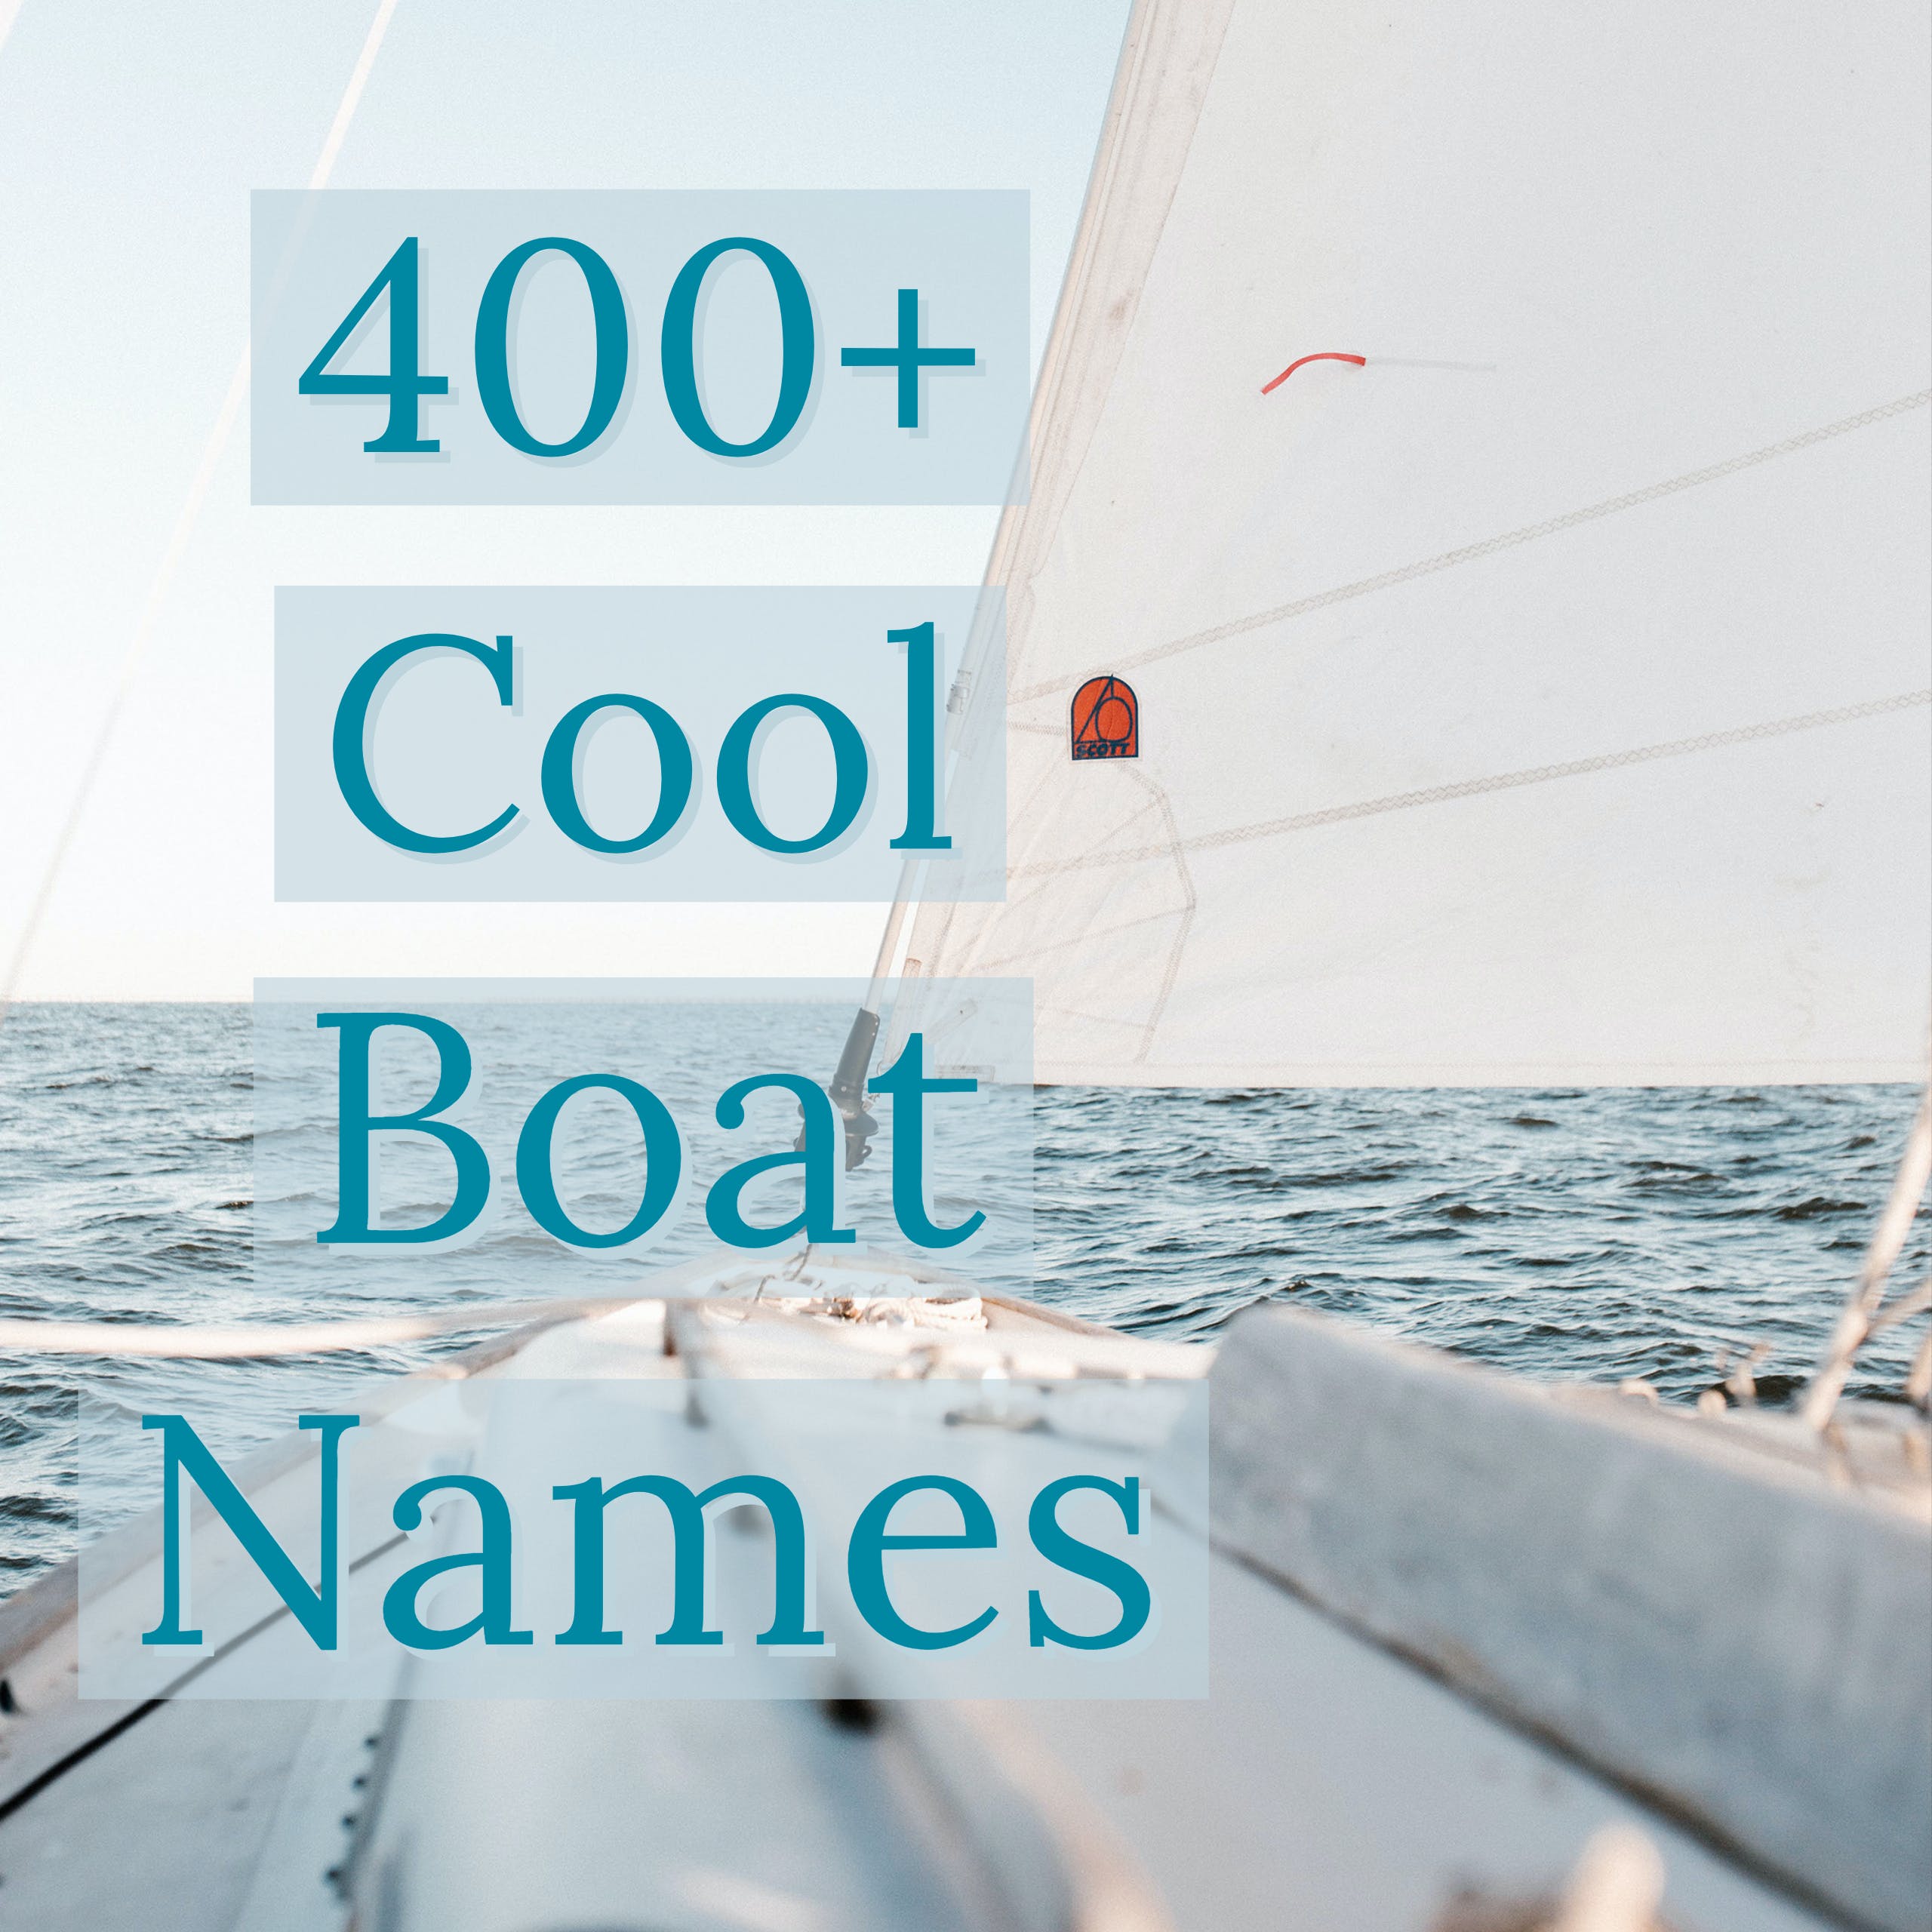 Best Boat Names